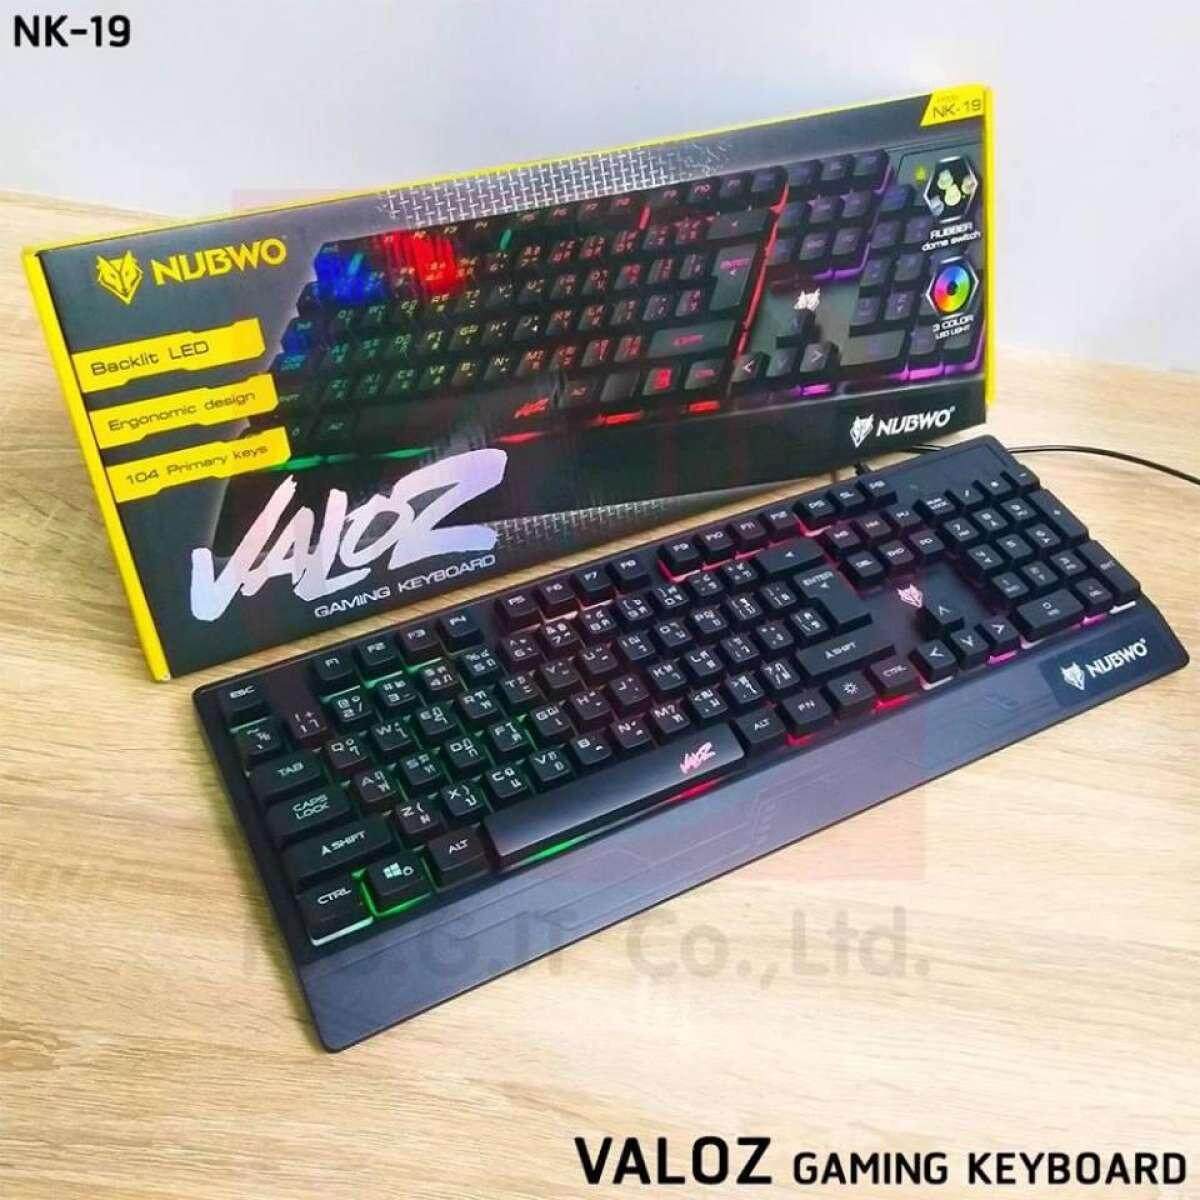 Nubwo คีย์บอร์ดเกมมิ่ง มีไฟ Mutant Gaming keyboard รุ่น NK-19